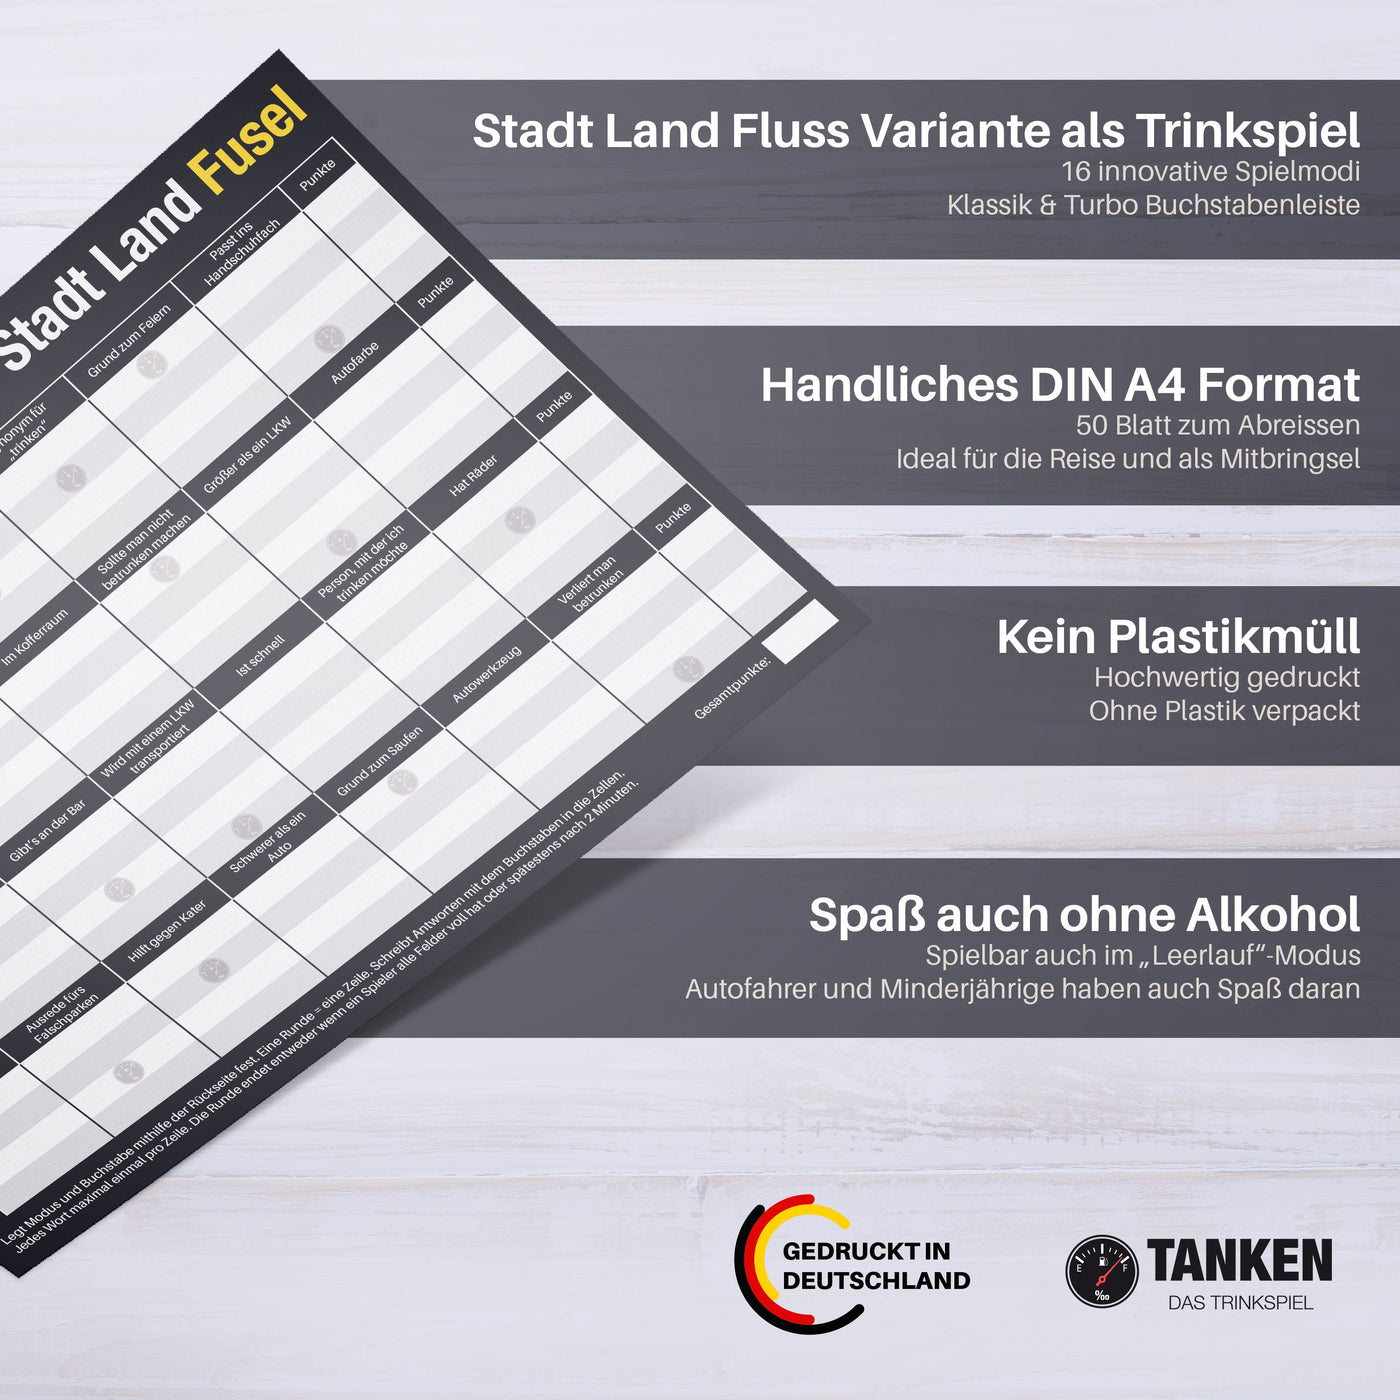 TANKEN Stadt Land Fusel Trinkspiel - Klassik Edition - 